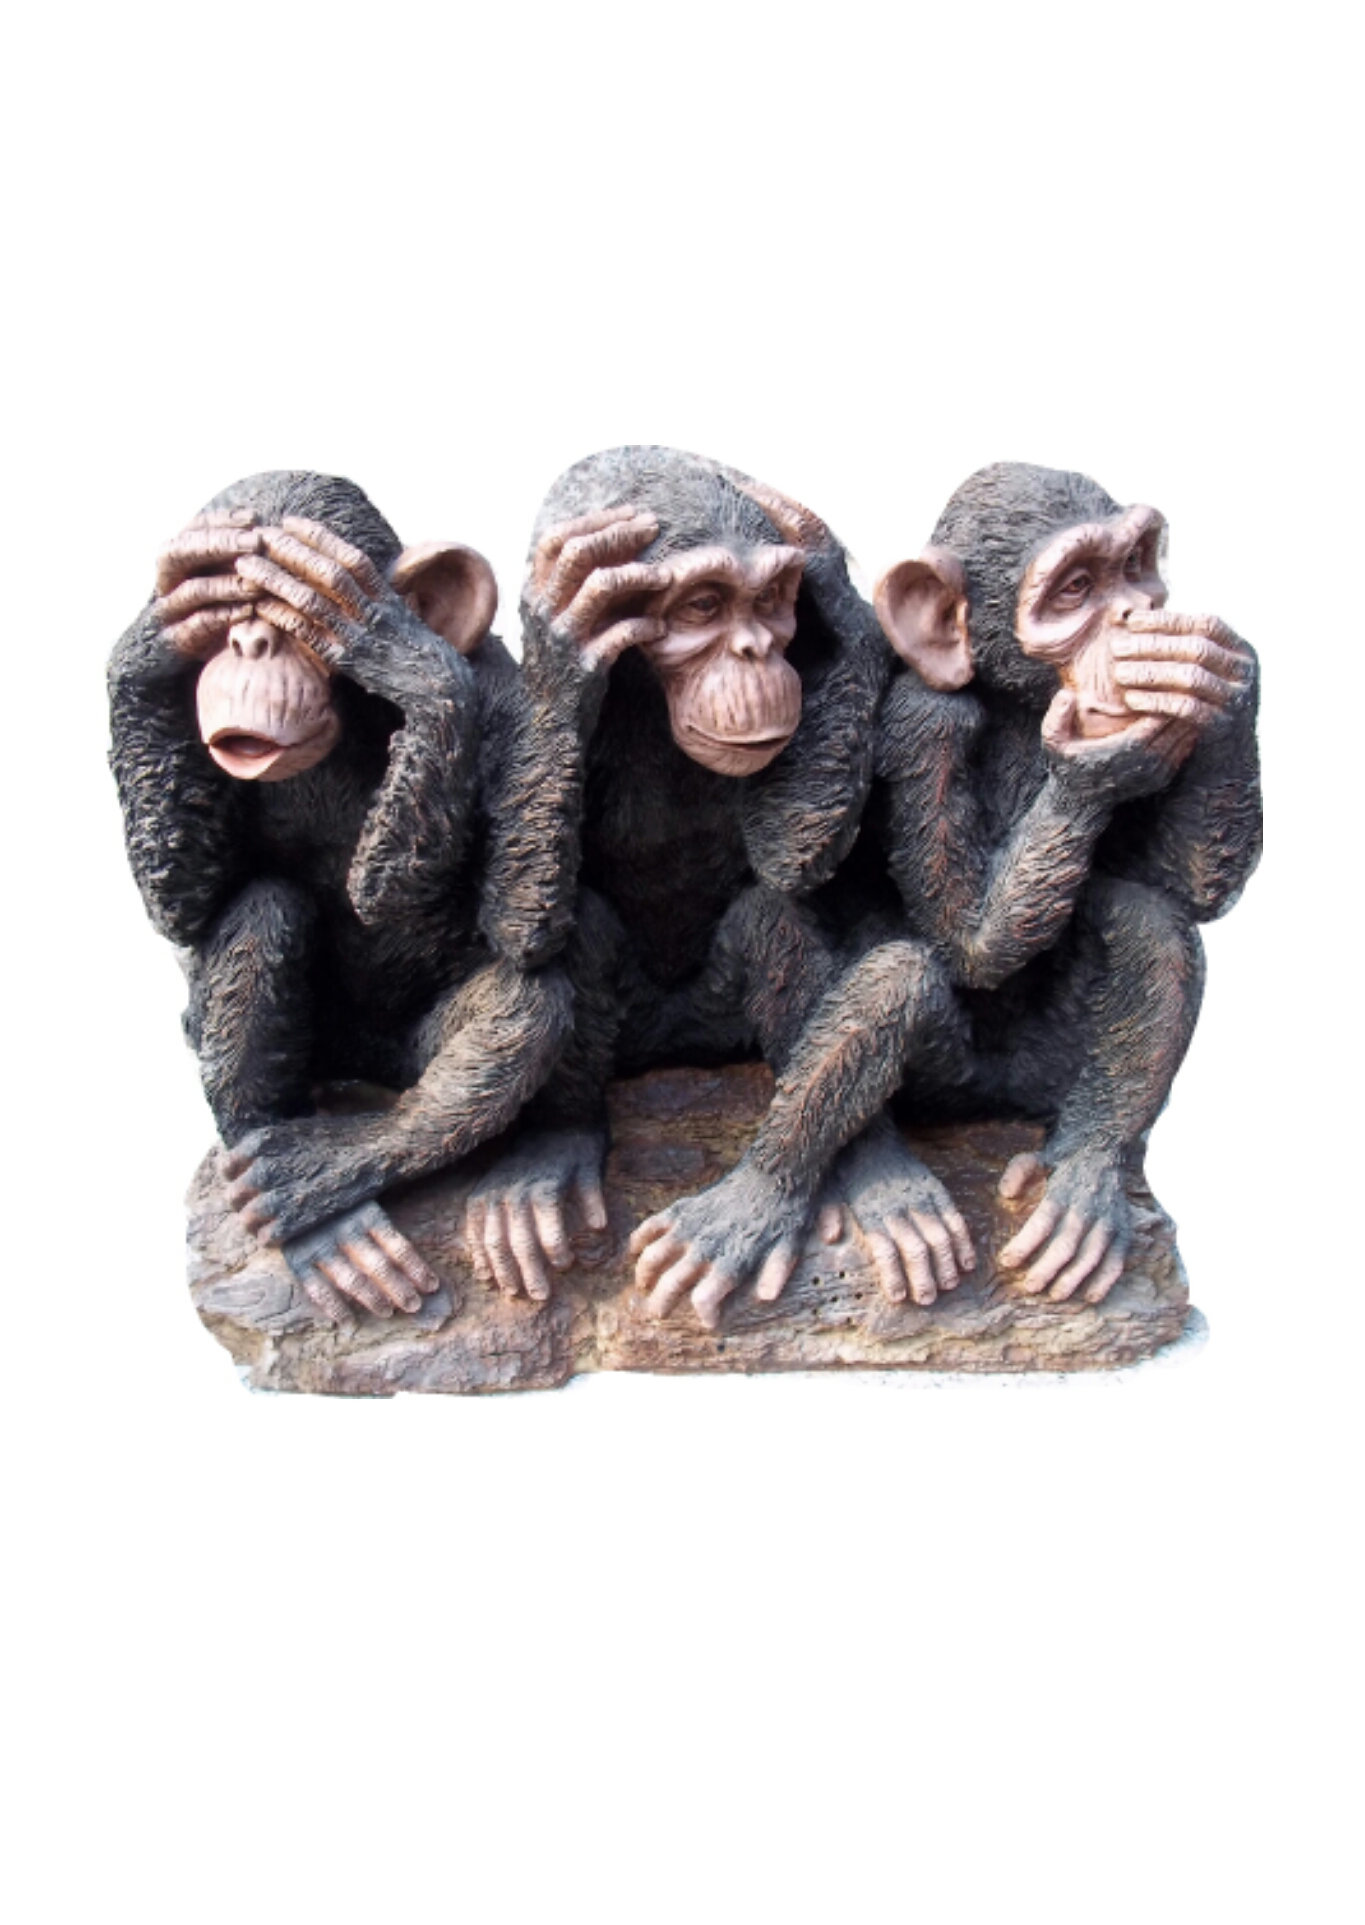 rekenkundig impliciet wasserette Hi-Line Gift Ltd. See/Hear/Speak No Evil Monkey Family Statue & Reviews |  Wayfair